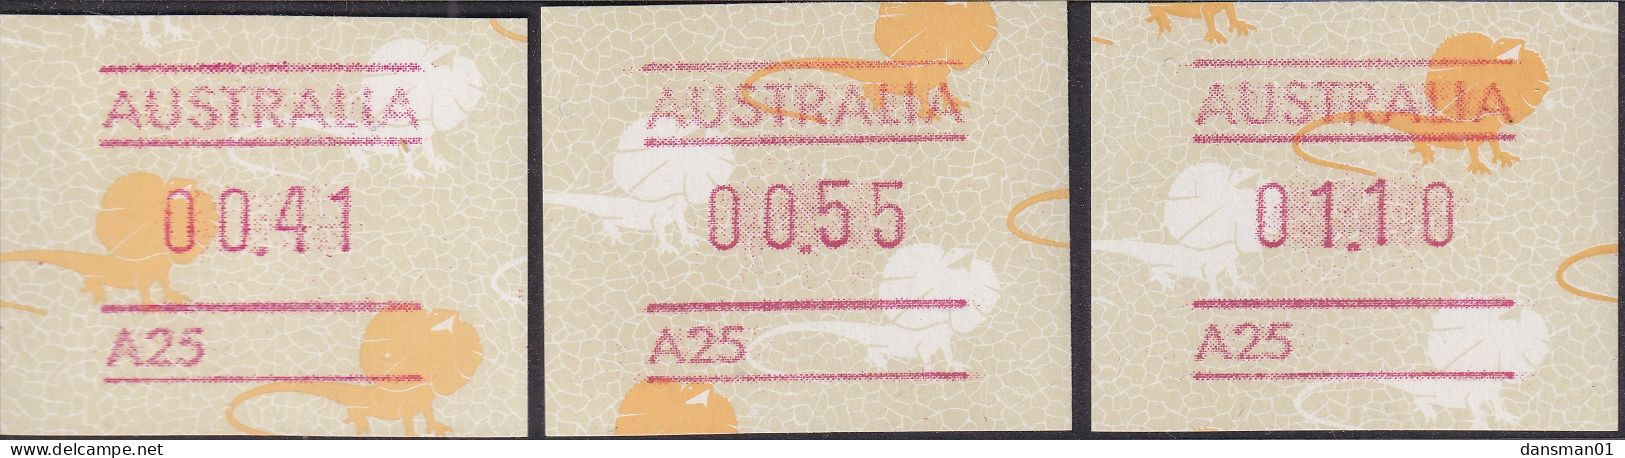 Australia 1989 Frama BUTTON SET A25 MNH - Nuovi